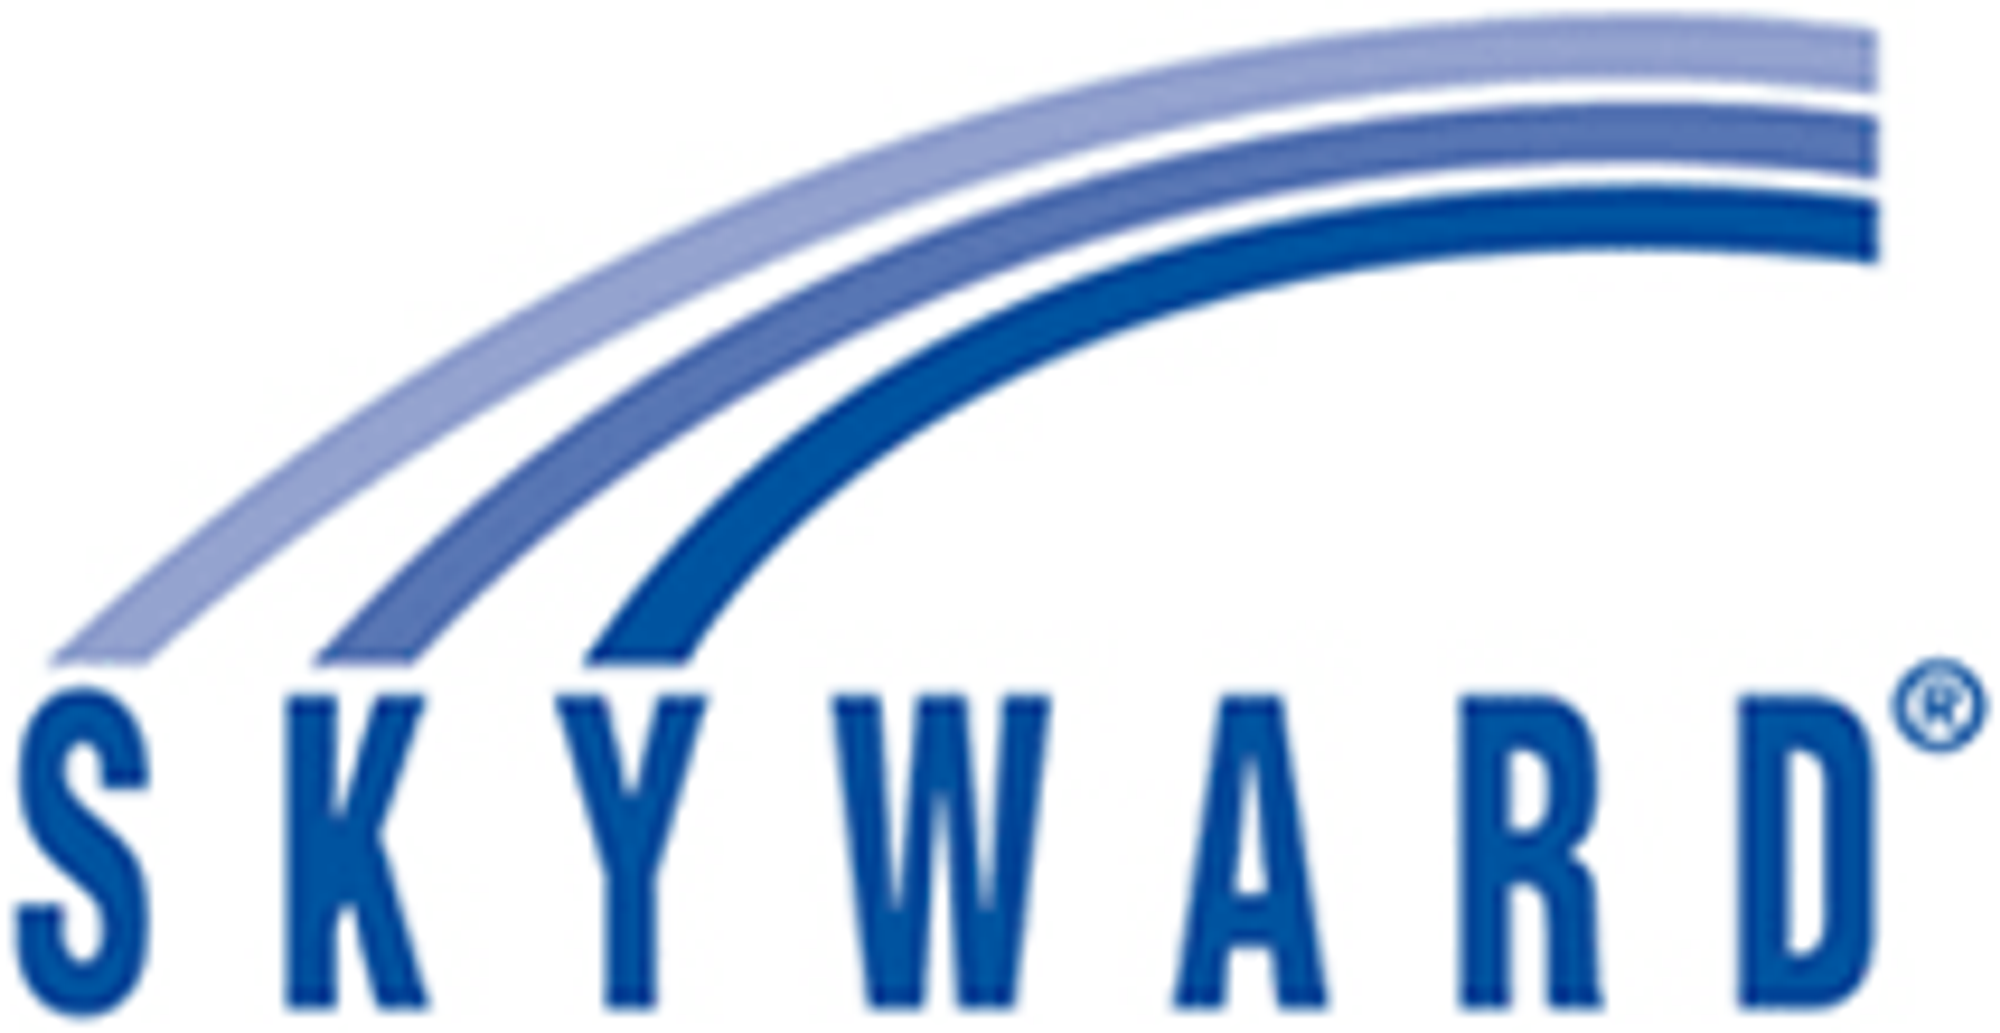       Skyward Student Management Suite logo